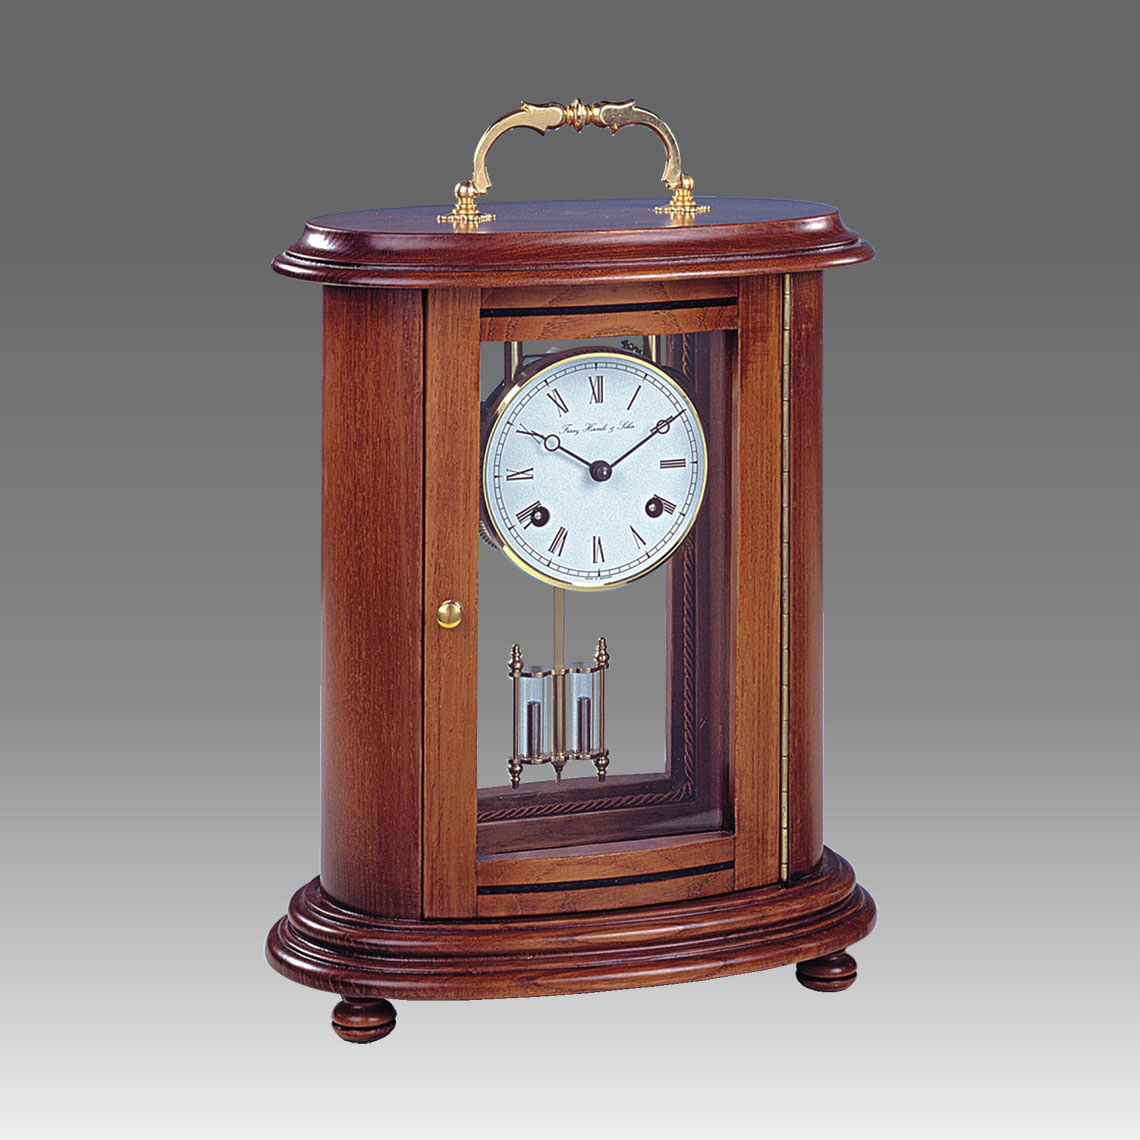 Mante Clock, Table Clock, Cimn Clock, Art.322/1 Walnut - Bim Bam melody on Bells, white round dial